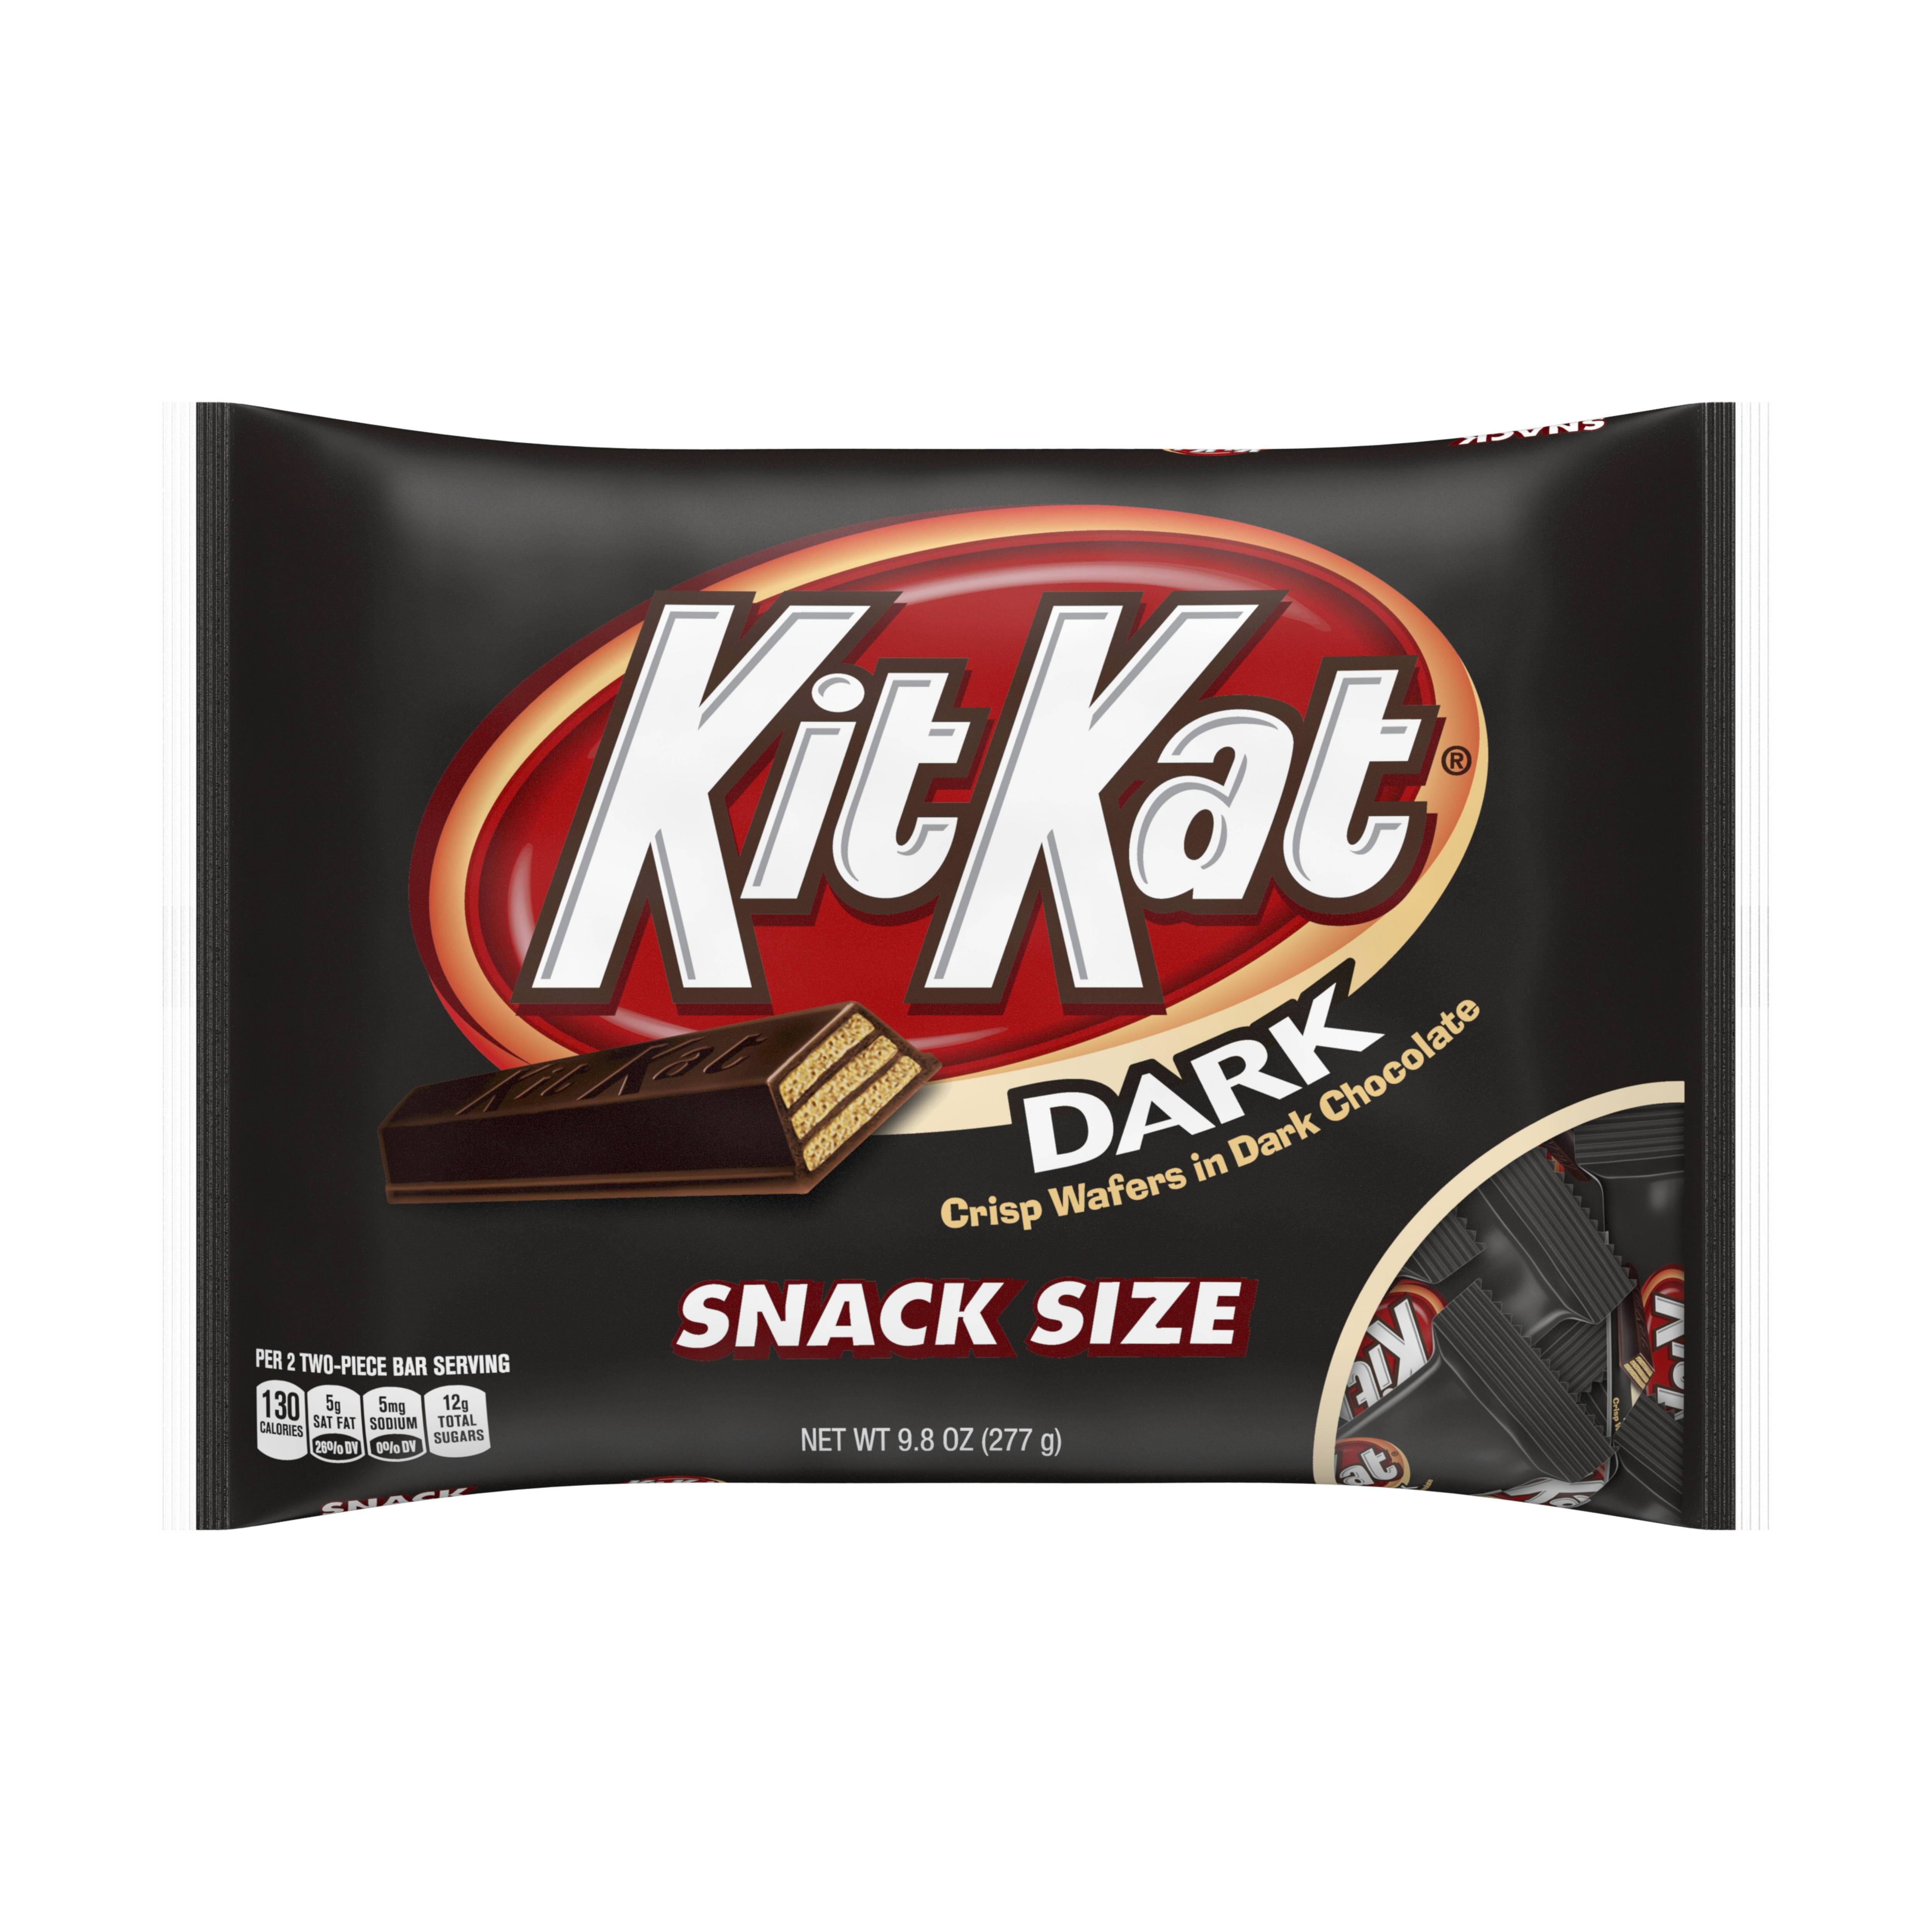 Kit kat dark chocolate